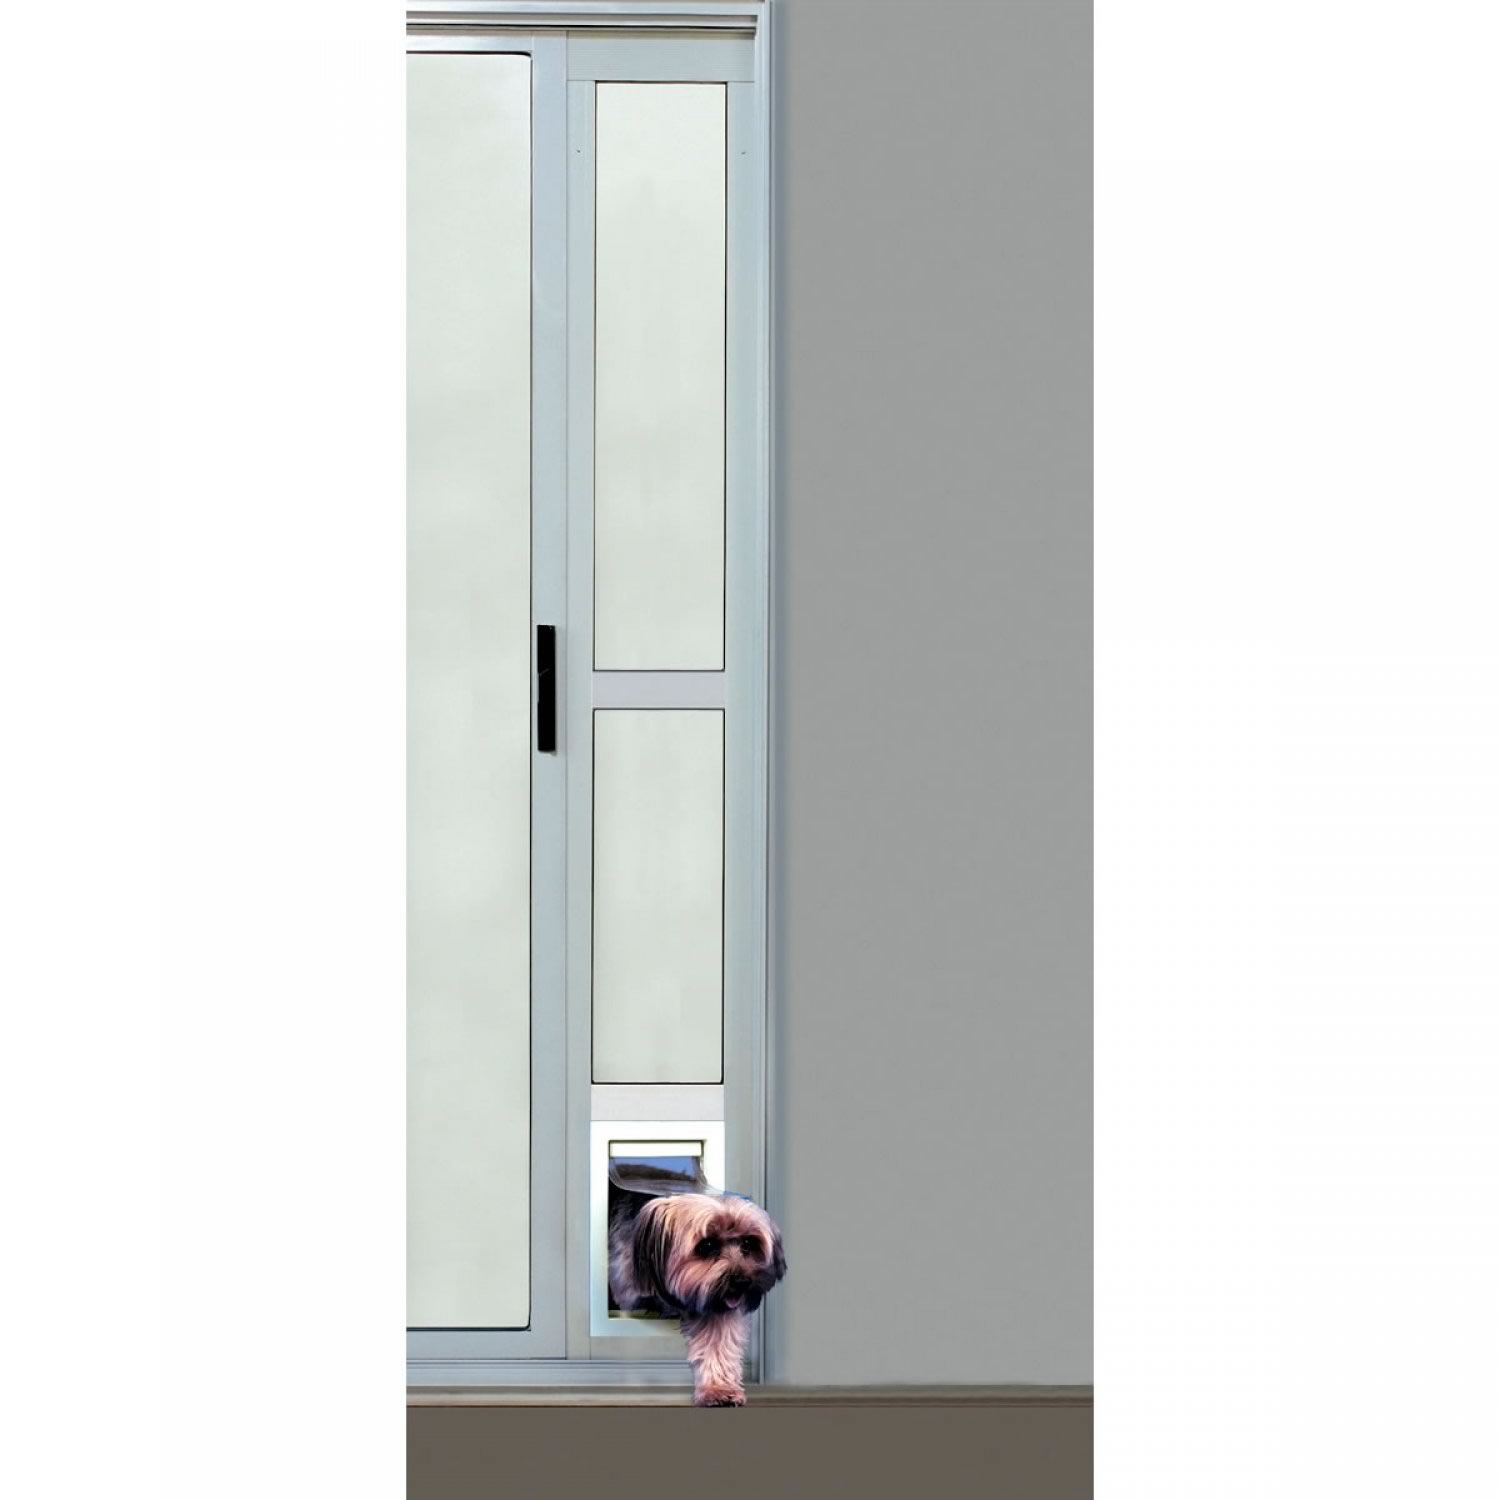 The SB Standard Patio Pet Door Insert is our best selling Pet Door for Sliding  Glass Doors - Single Pane Safety Glass with a Single Flexible Vinyl Pet Door  Flap that features